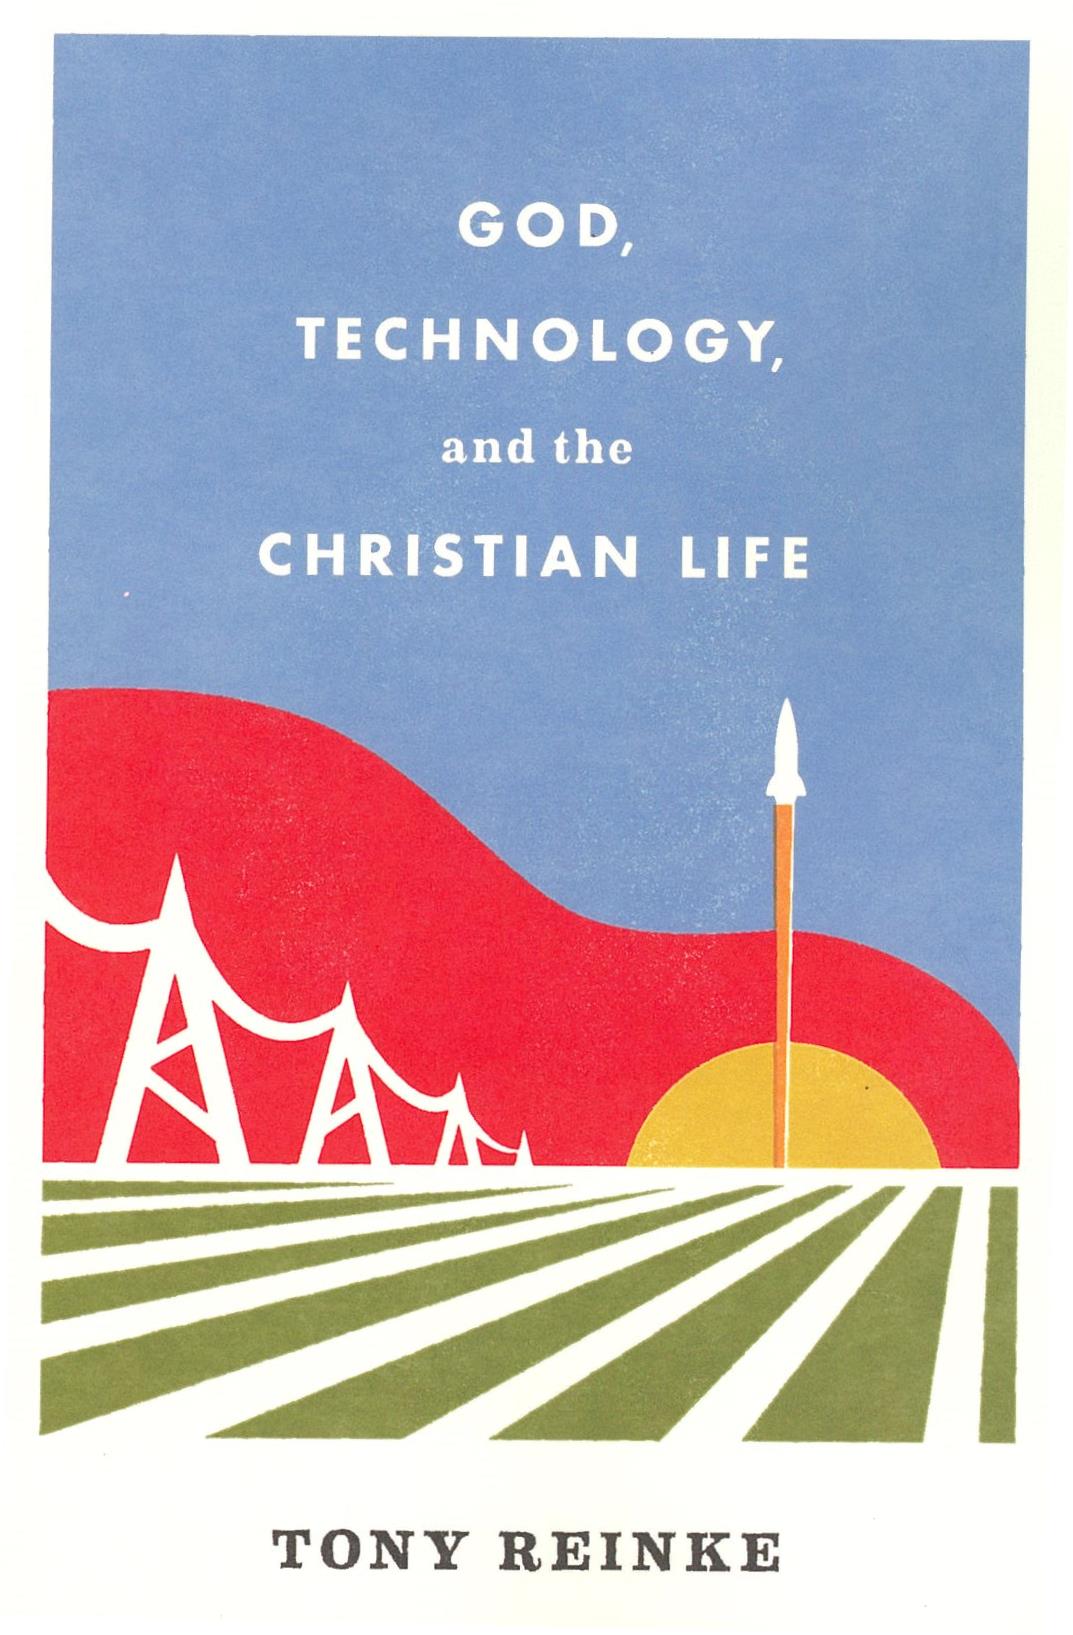 GOD, TECHNOLOGY, AND THE CHRISTIAN LIFE Tony Reinke